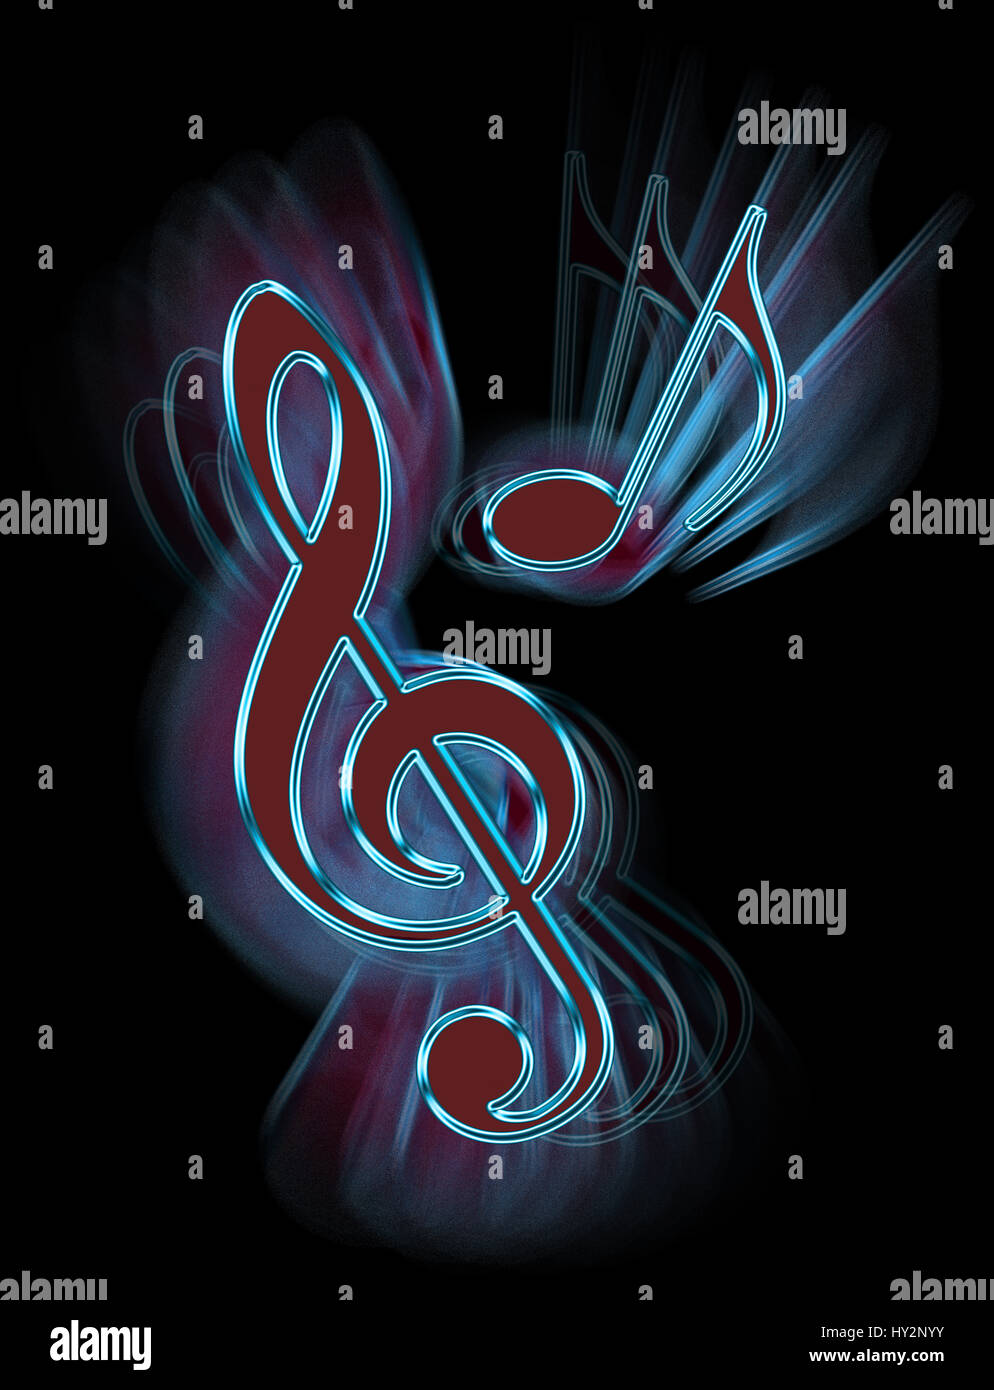 Digital artwork depicting abstract Treble Clef and Quaver music symbols. Stock Photo